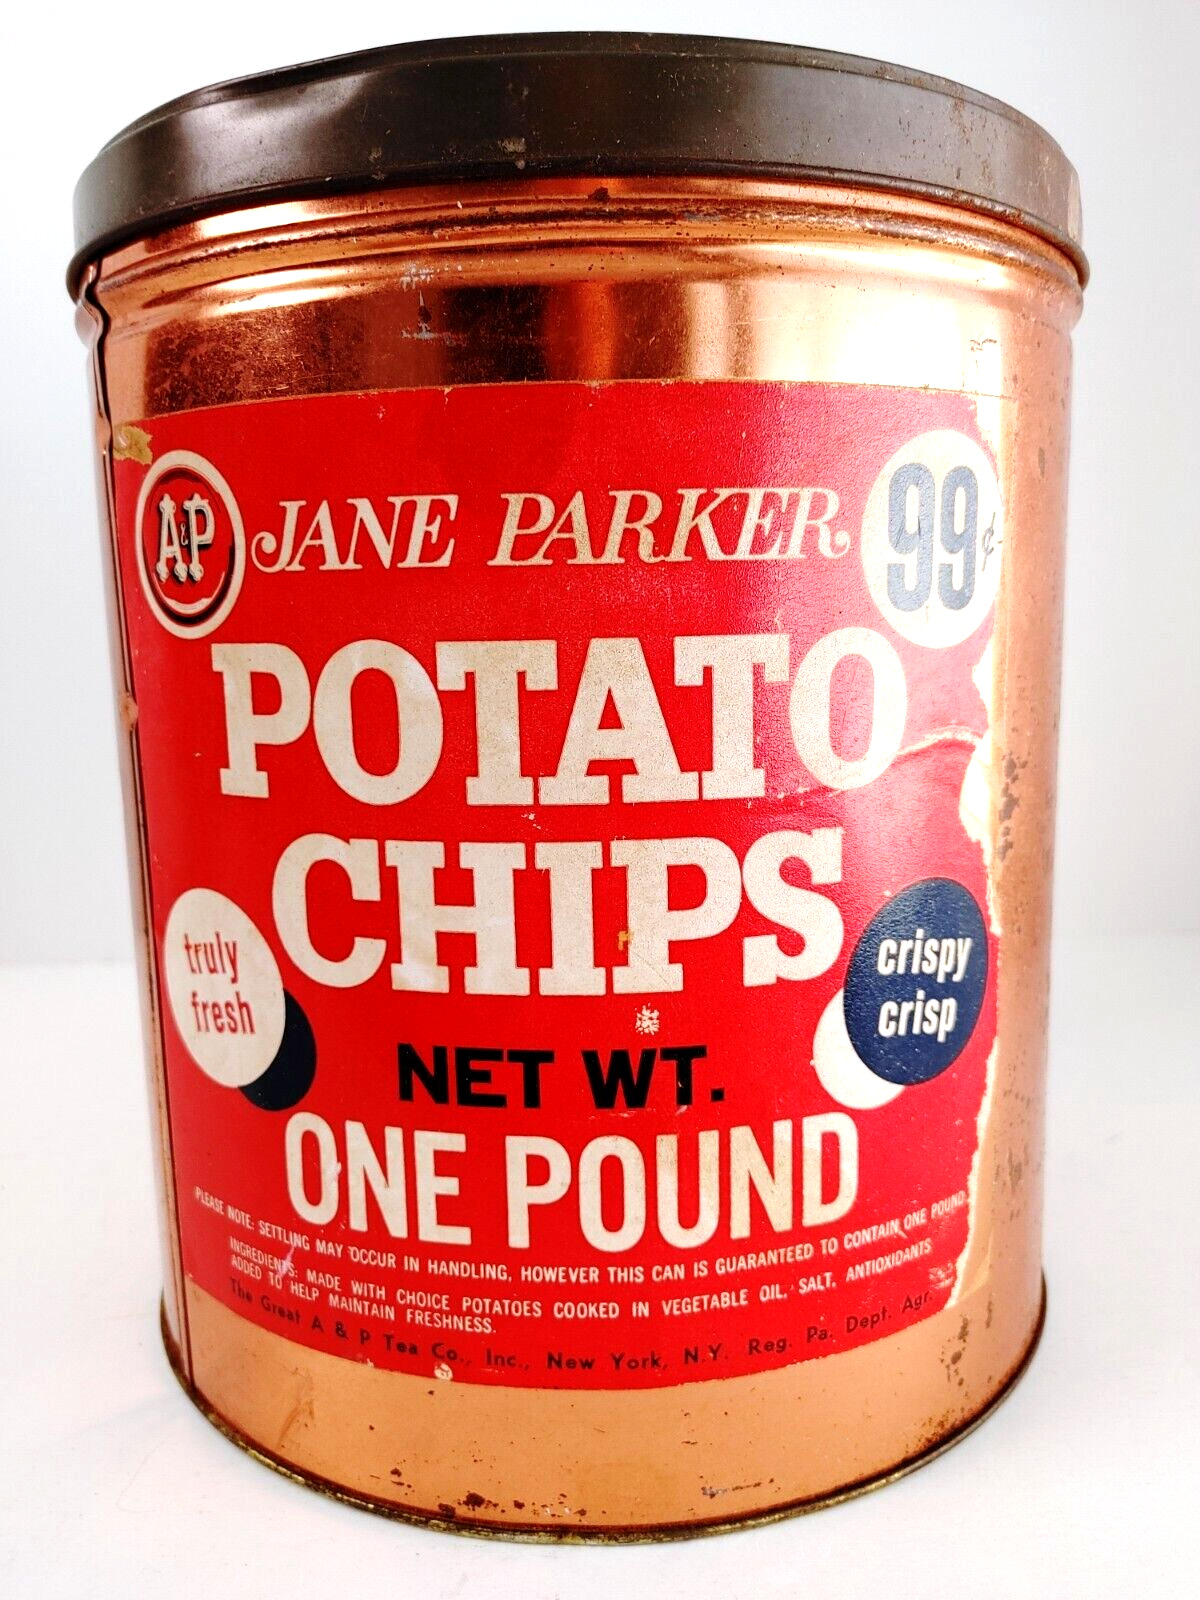 Vintage A&P Jane Parker Potato Chips Advertising Tin Canister 1 lb Size #21676